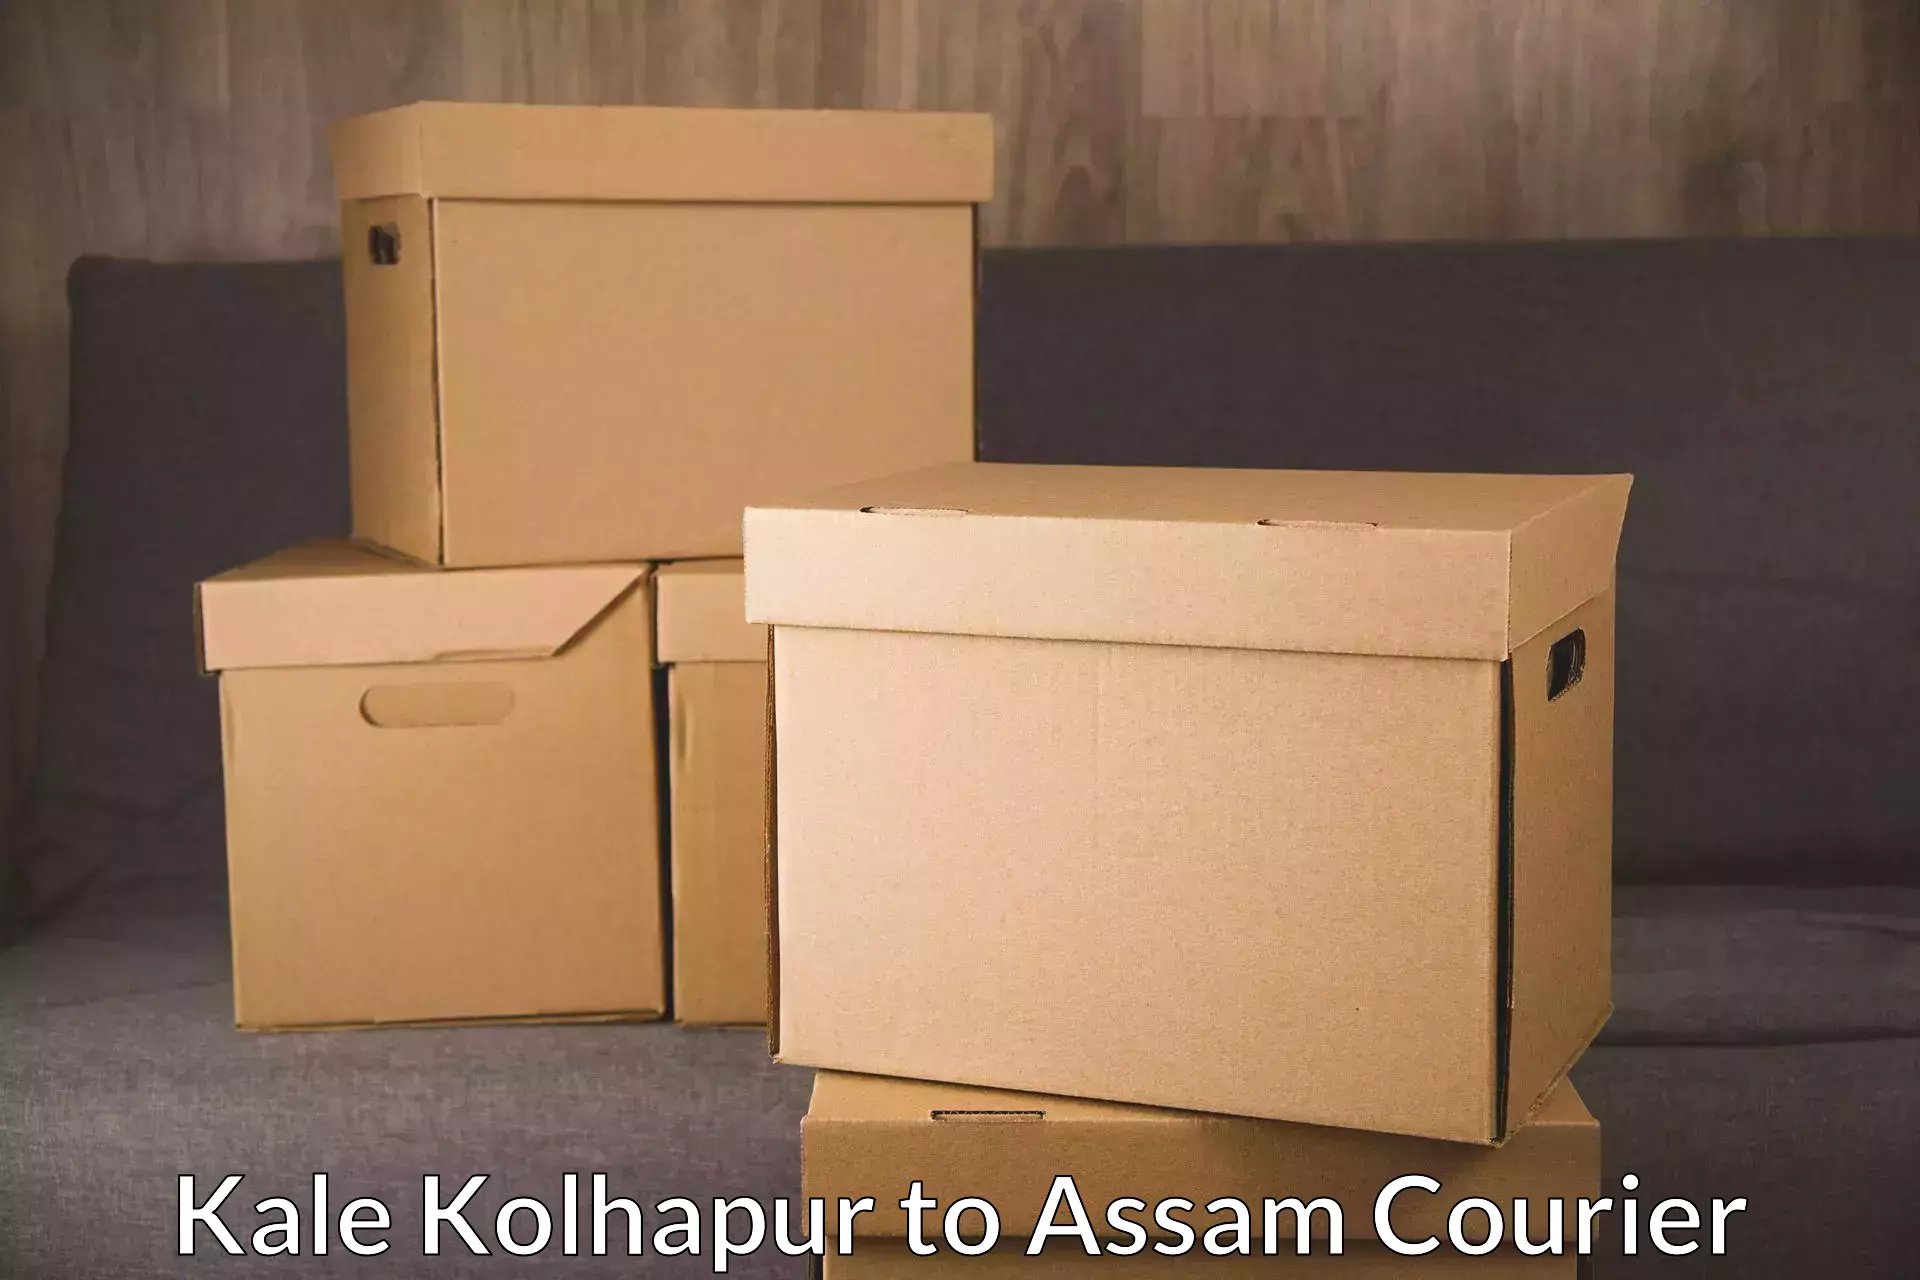 Professional courier handling Kale Kolhapur to IIIT Guwahati